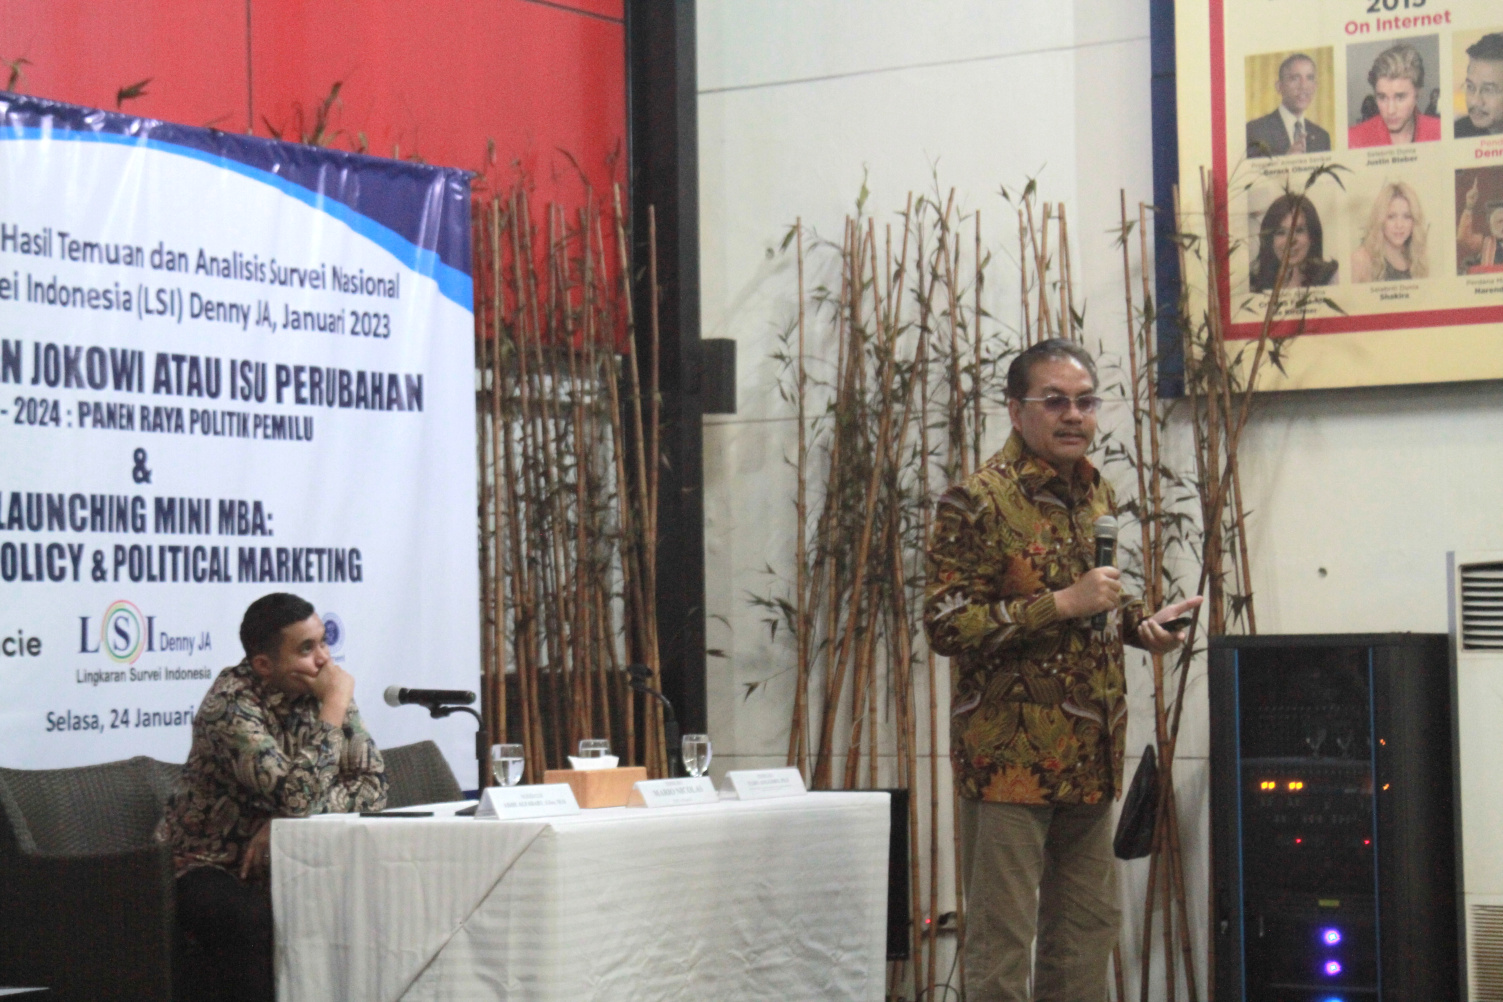 LSI Denny JA gelar analisis survei Melanjutkan Jokowi atau Isu Perubahan (Ashar/SinPo.id)